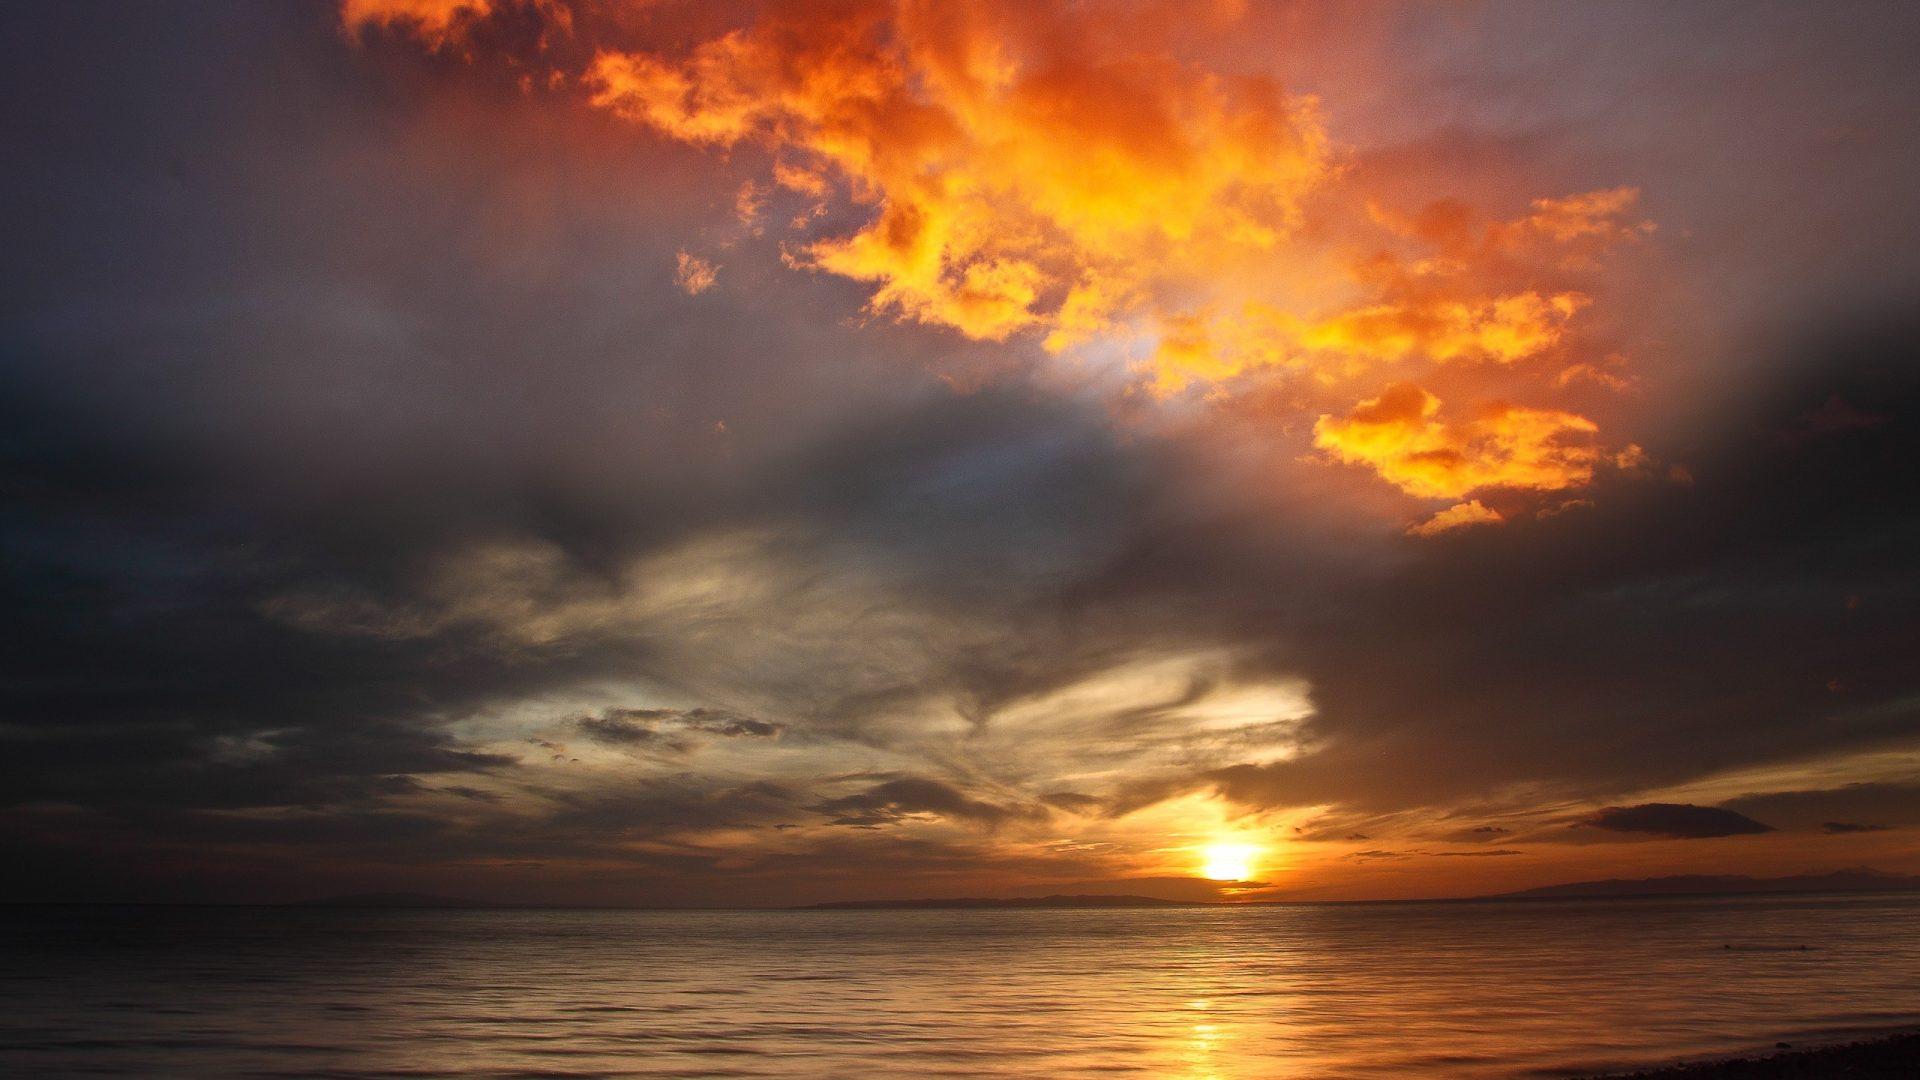 Fiery Tag wallpaper: Fiery Sunset Ocean Sky Colors Sunsets